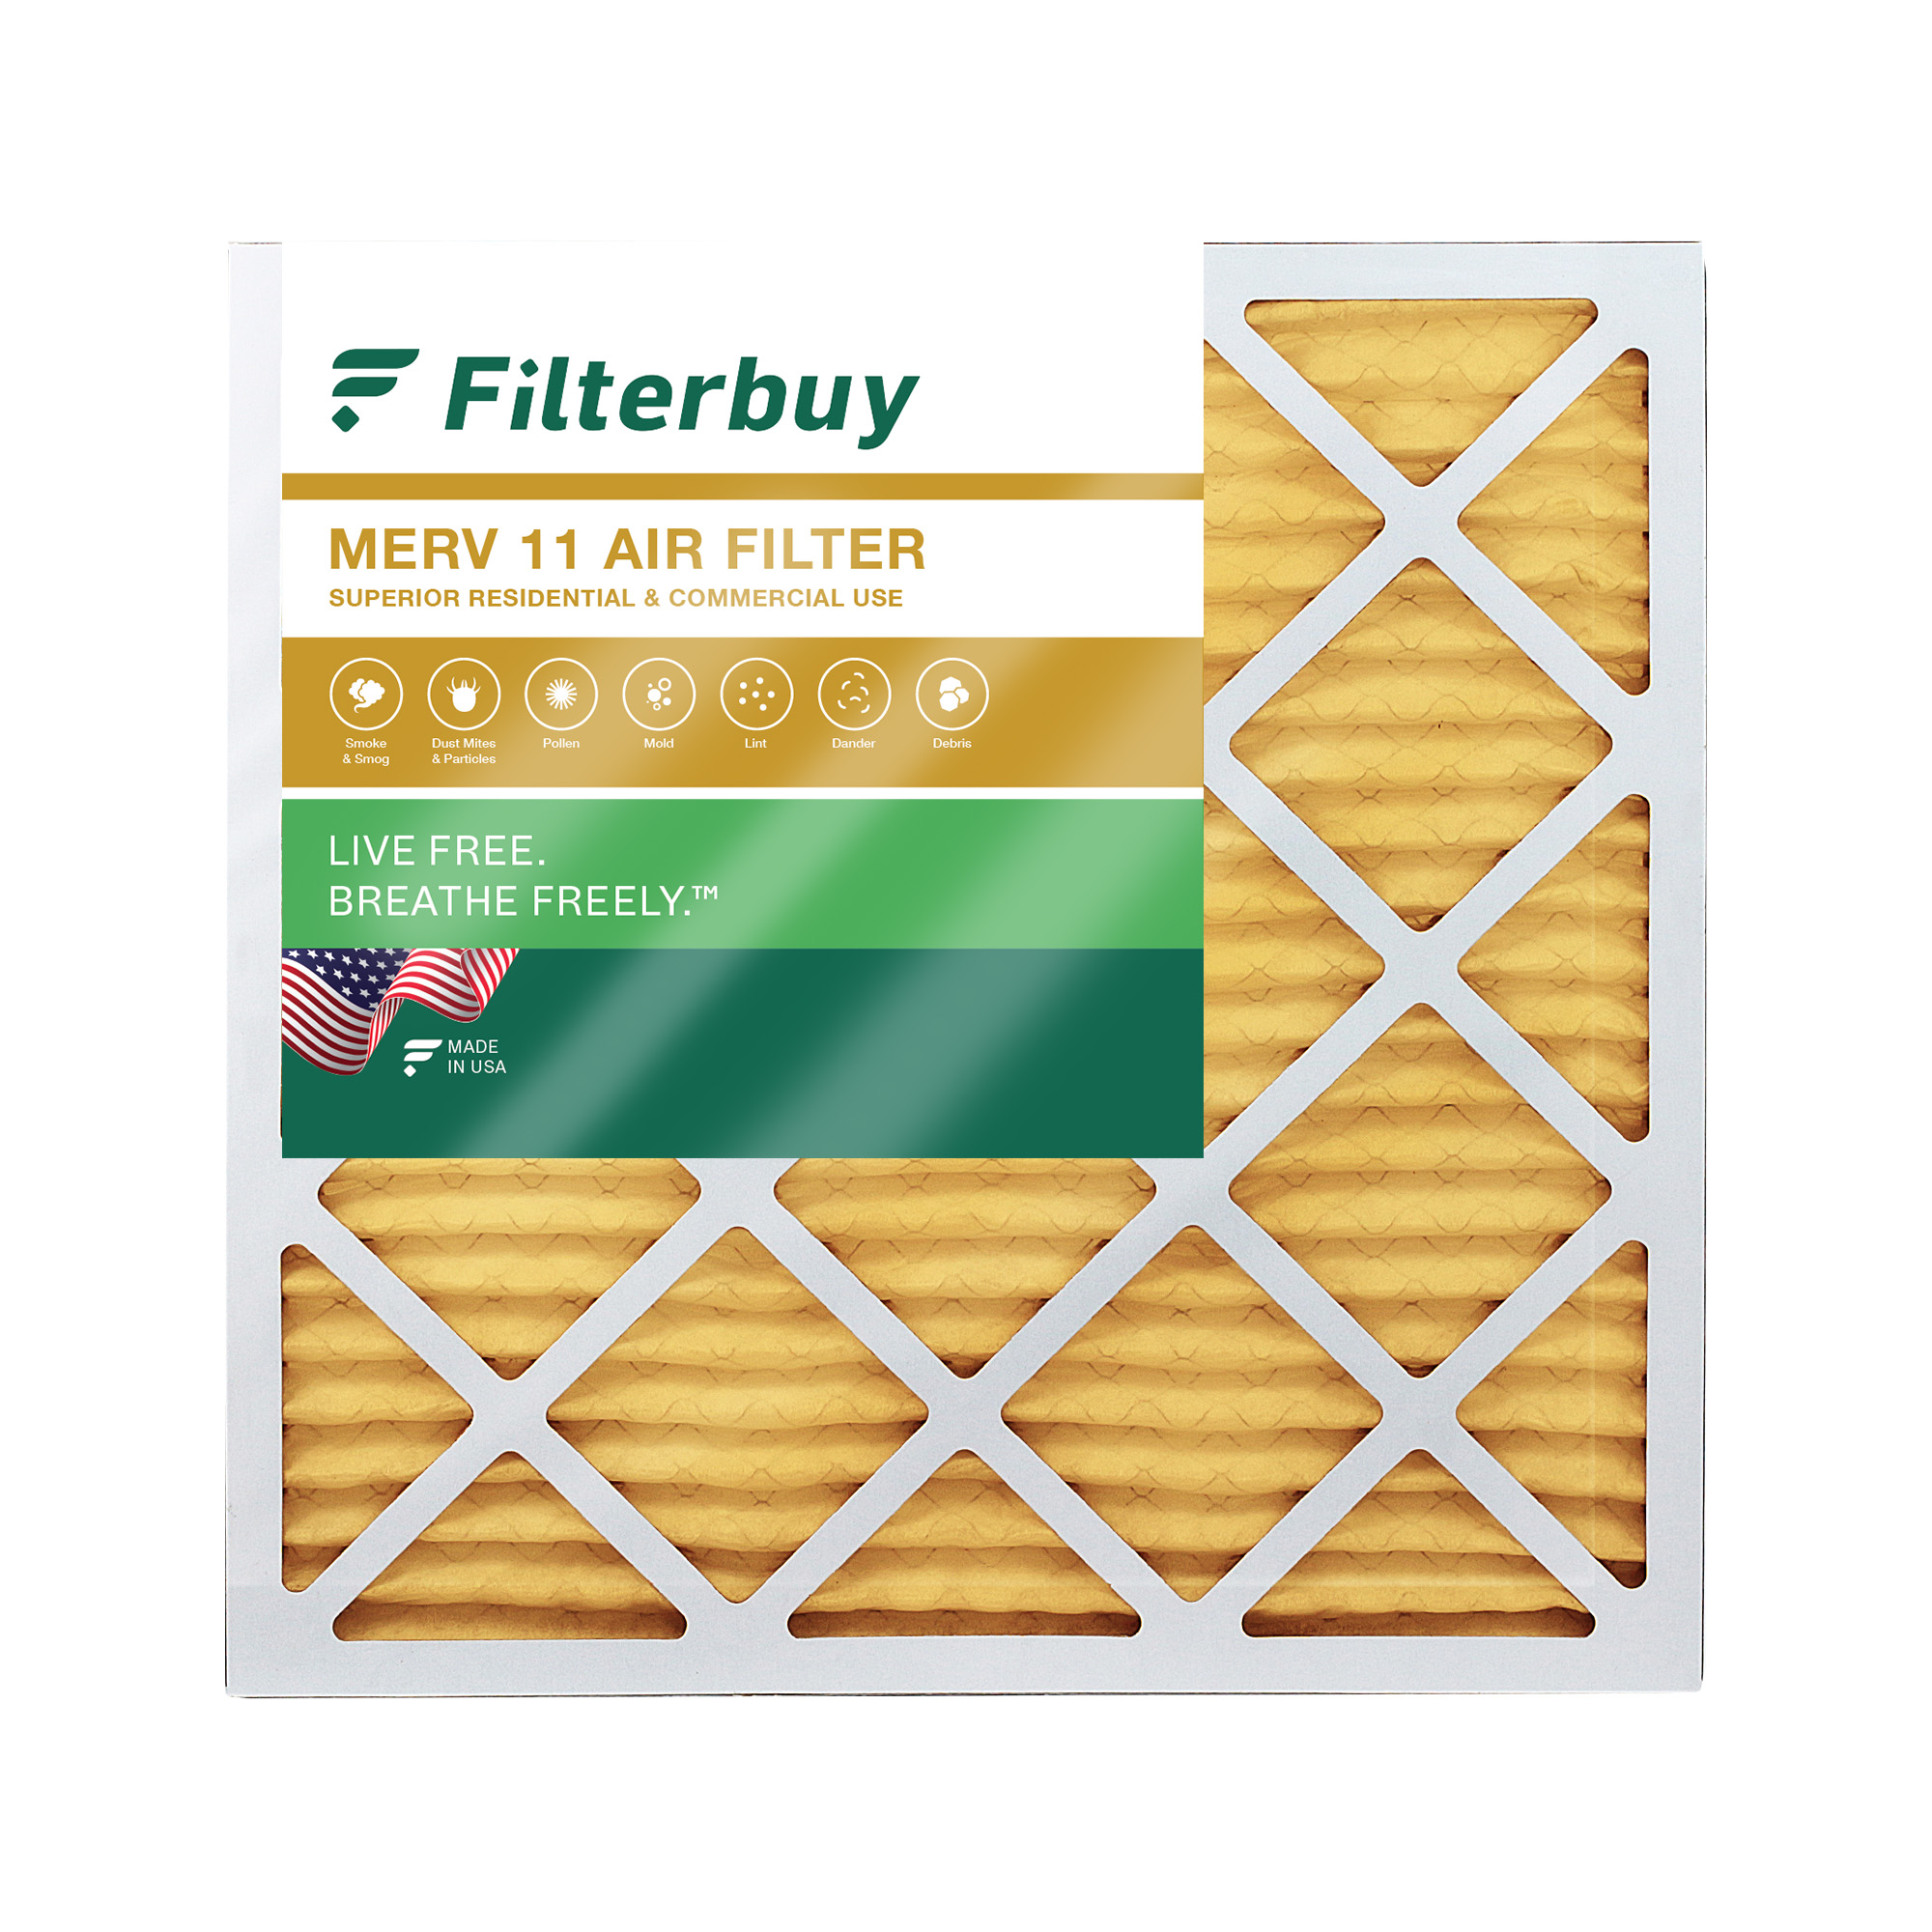 How does a MERV 11 air filter work - Filterbuy MERV 11 Filter